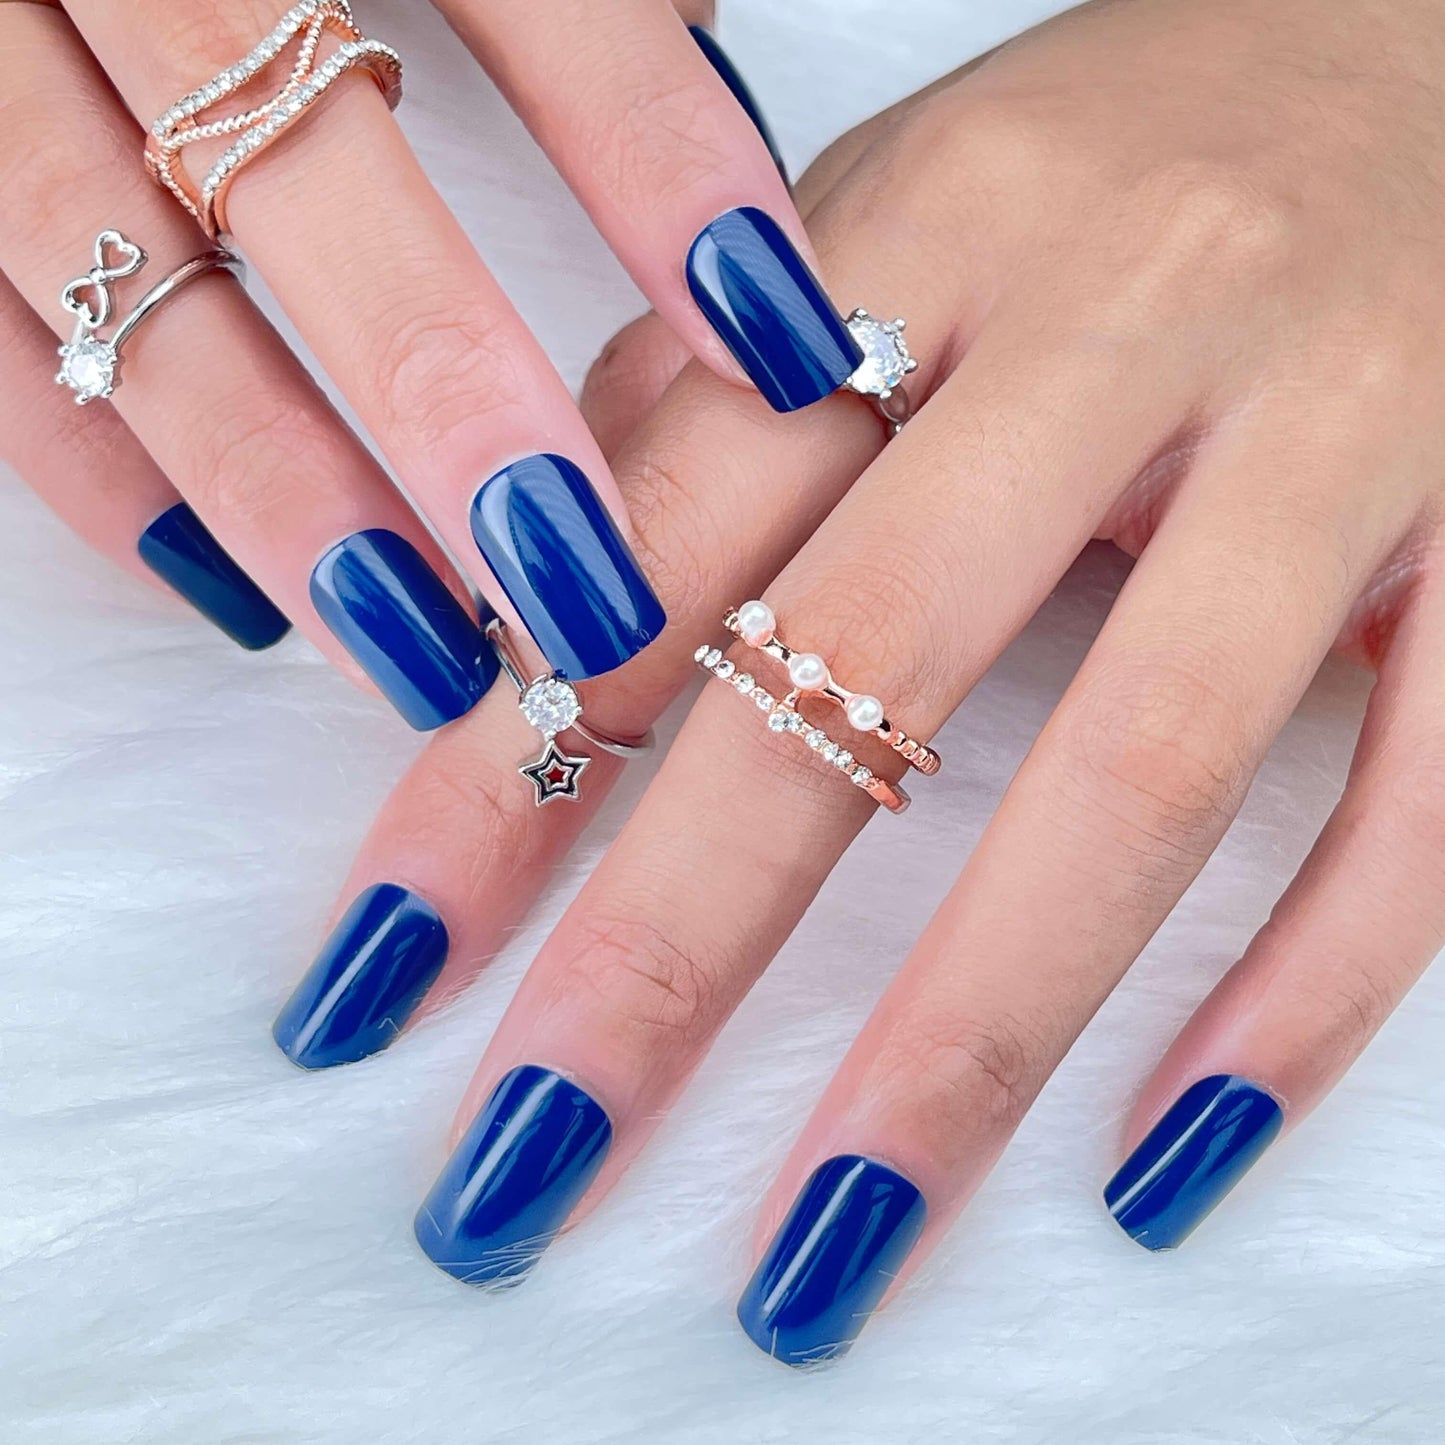 [AUTUMN SALE] Pure Color Dark Navy Blue Medium Square Press On Nails - Belle Rose Nails